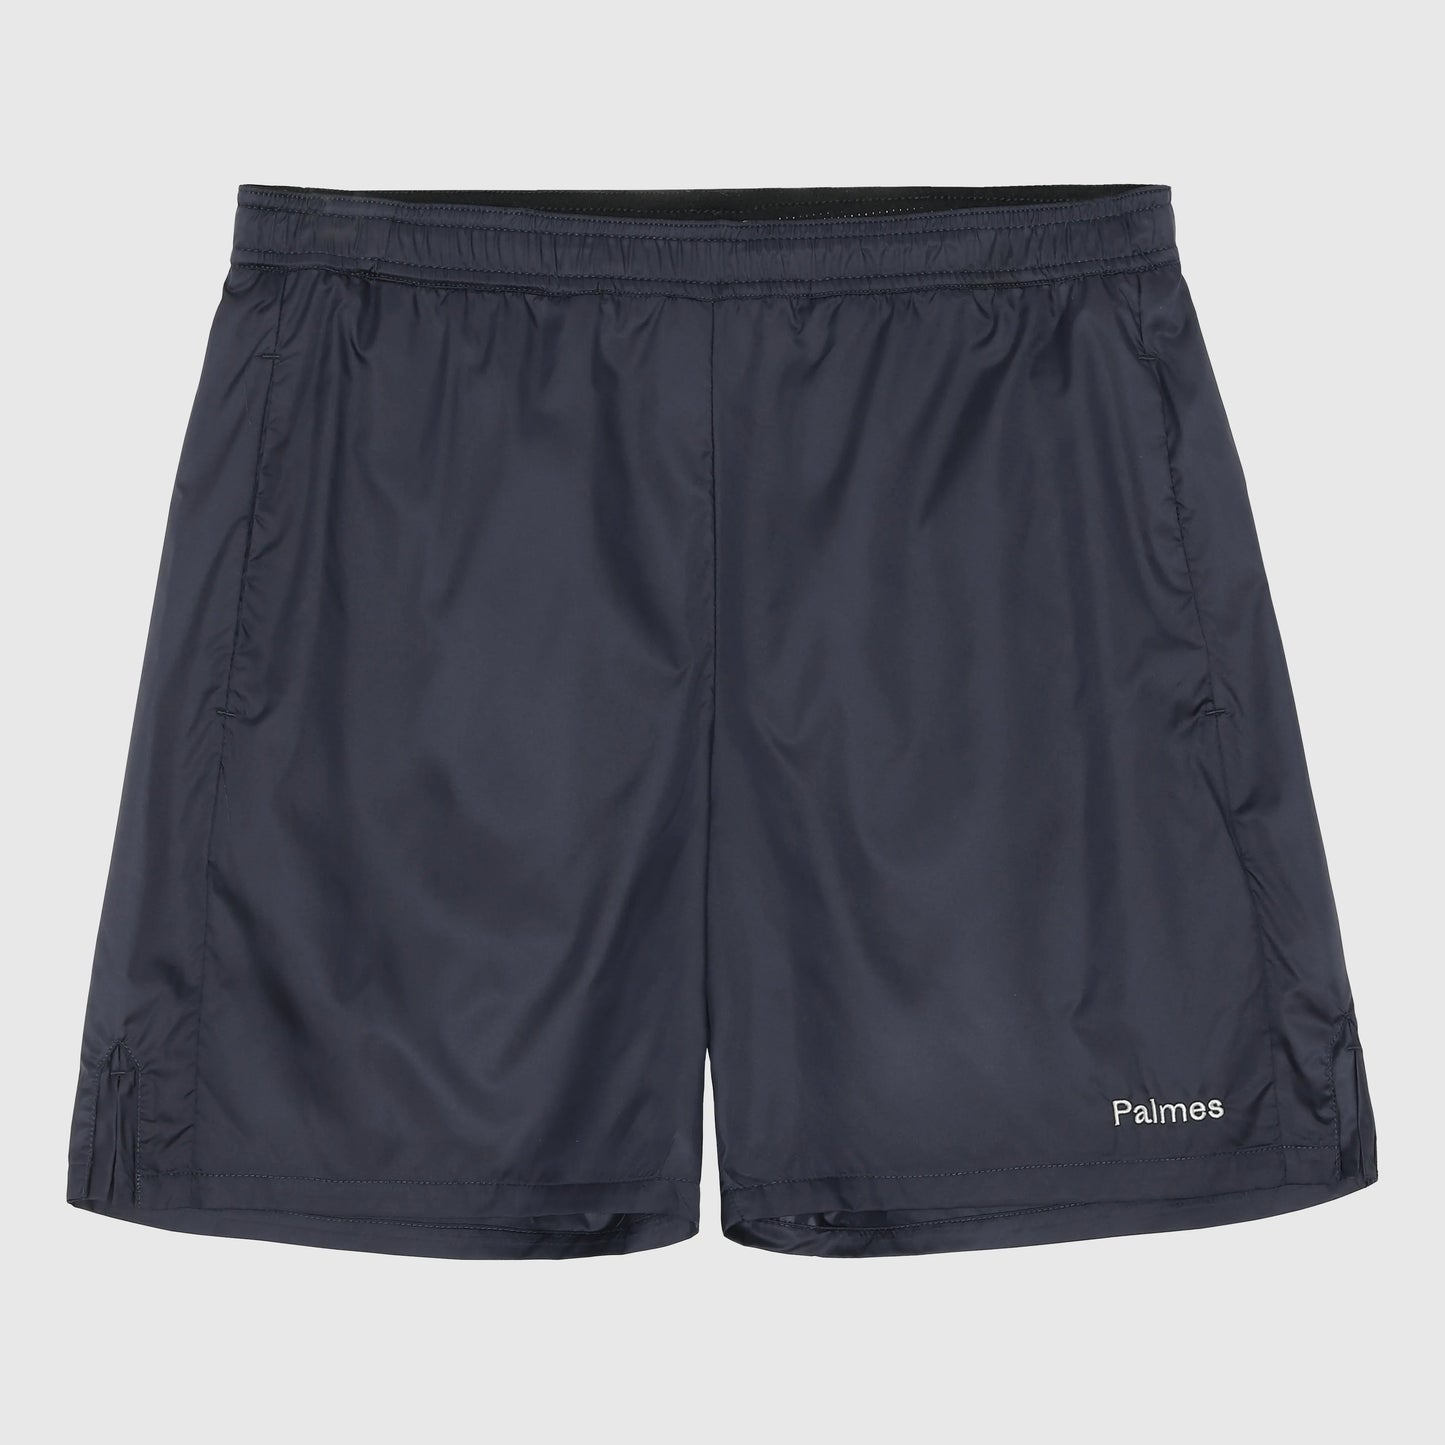 Palms Middle Shorts - Navy Shorts Palmes 